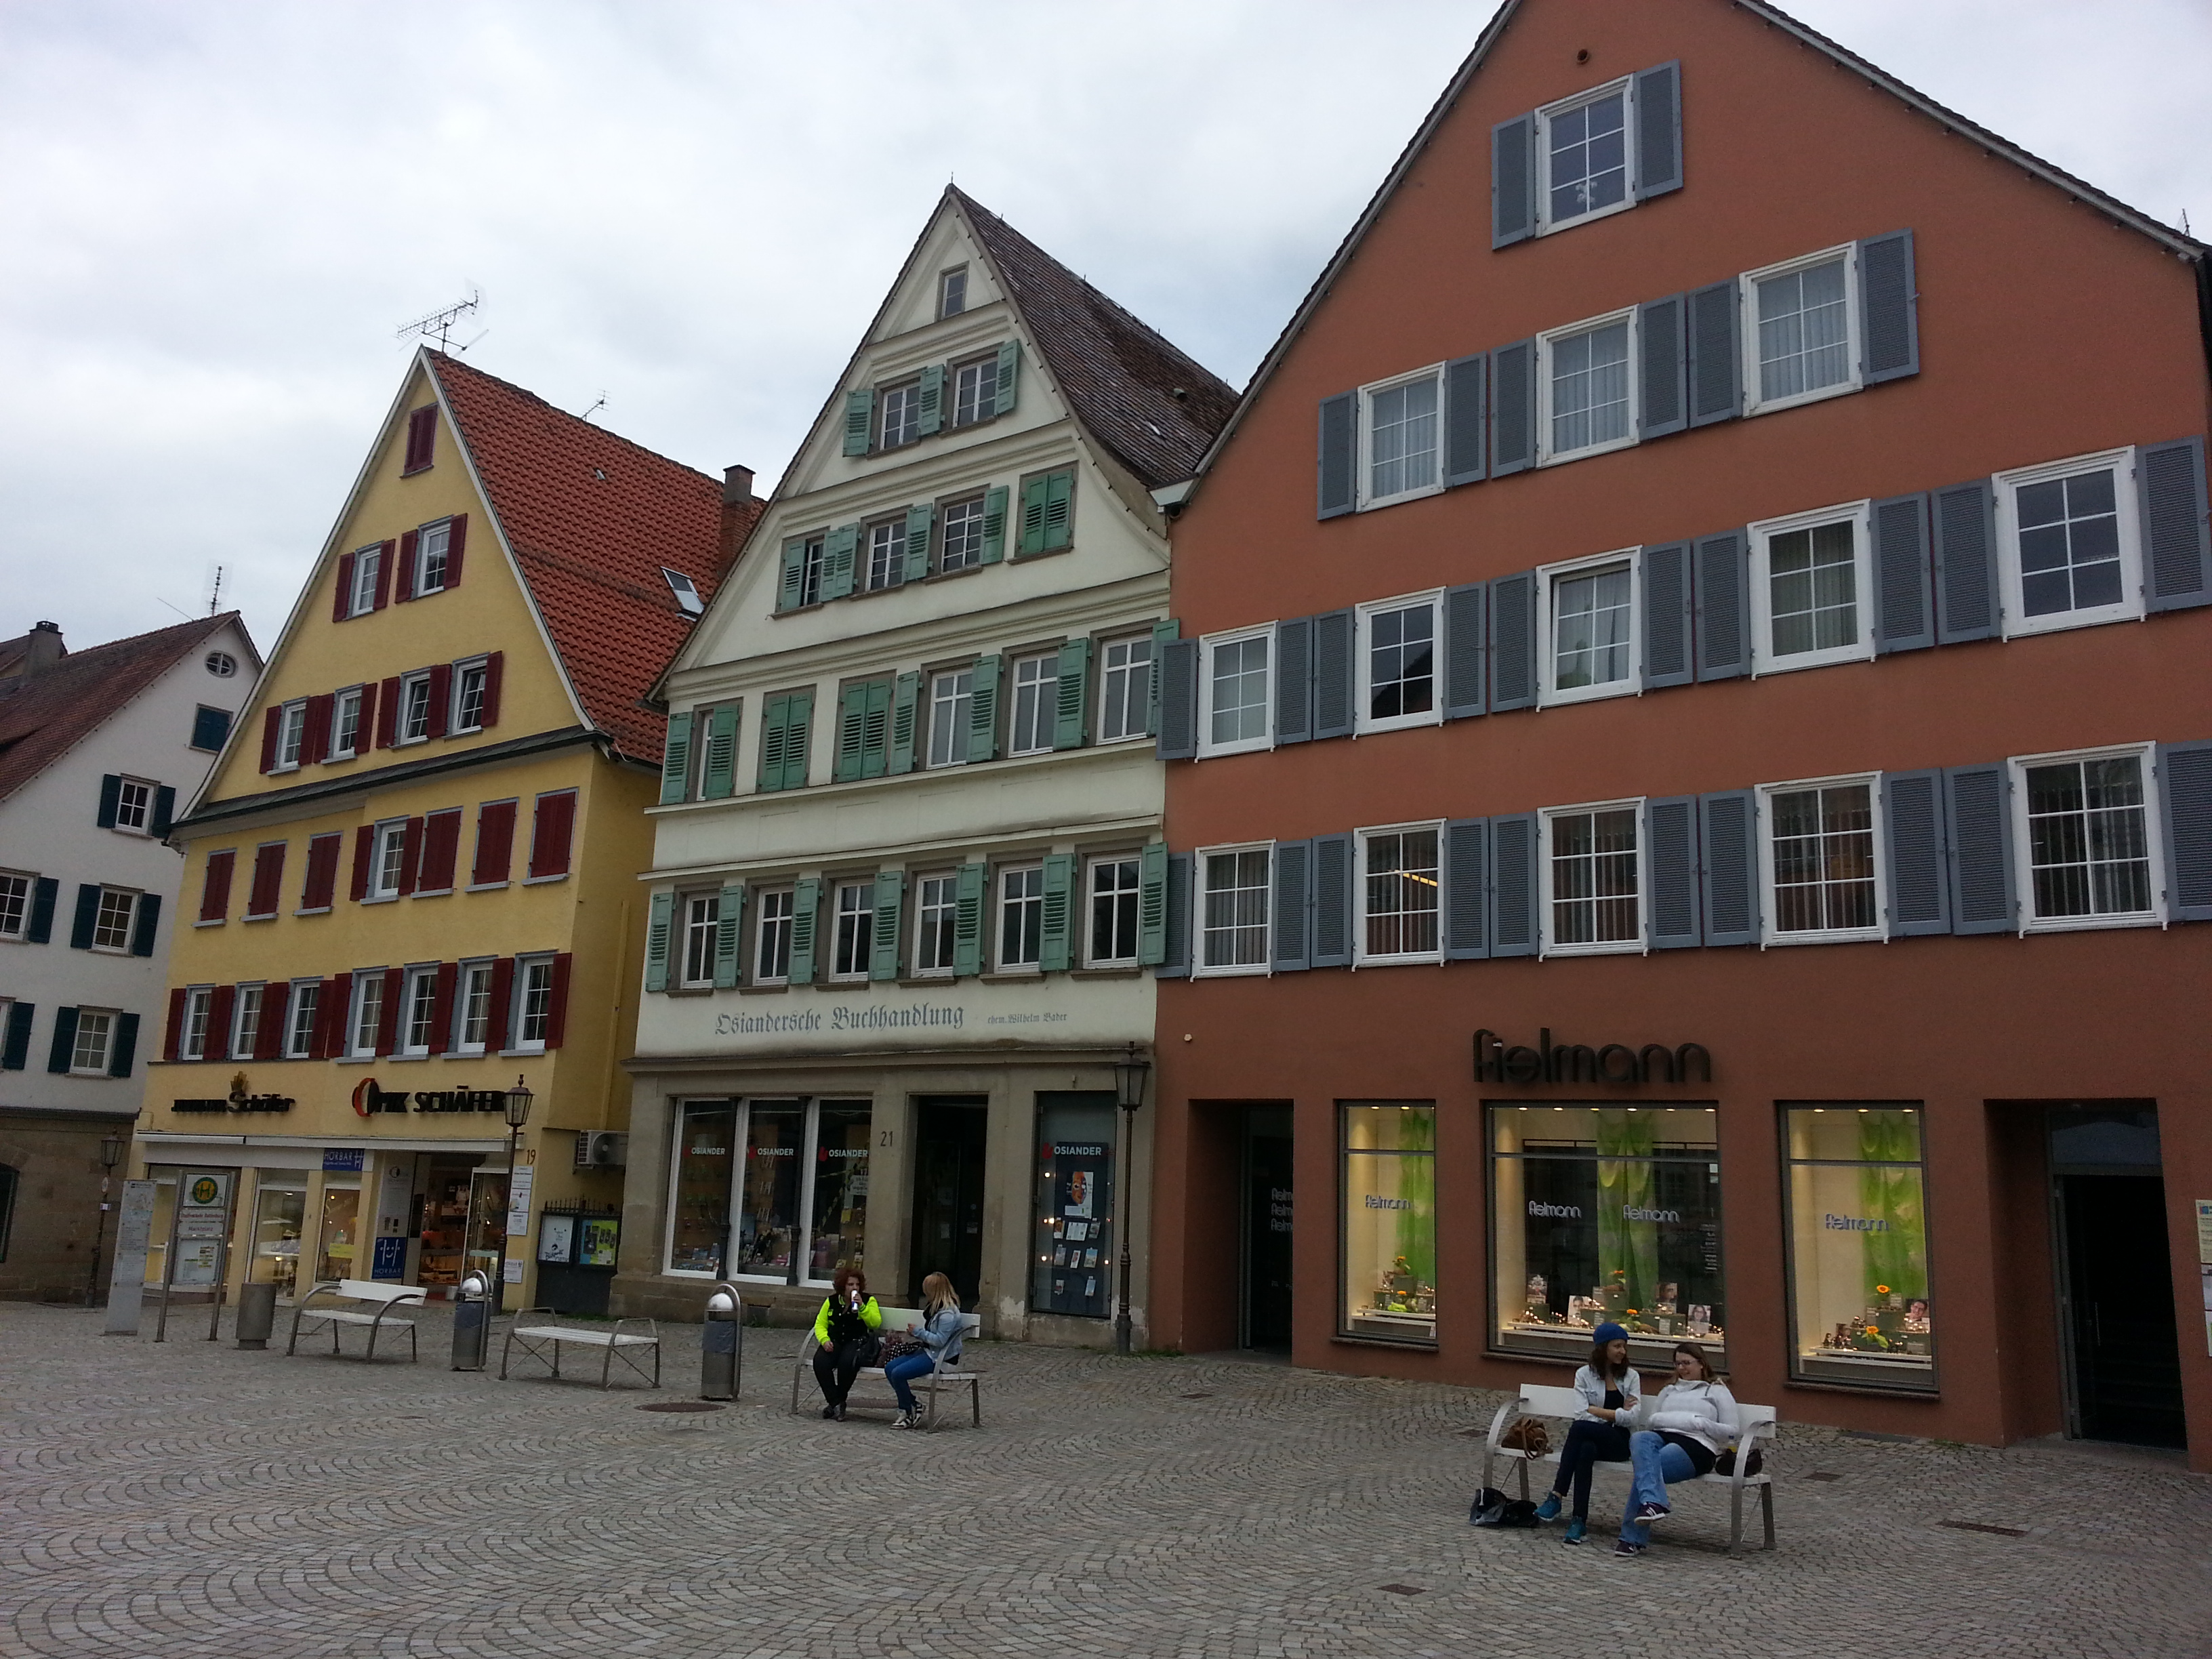 rottenburg - quaint old city